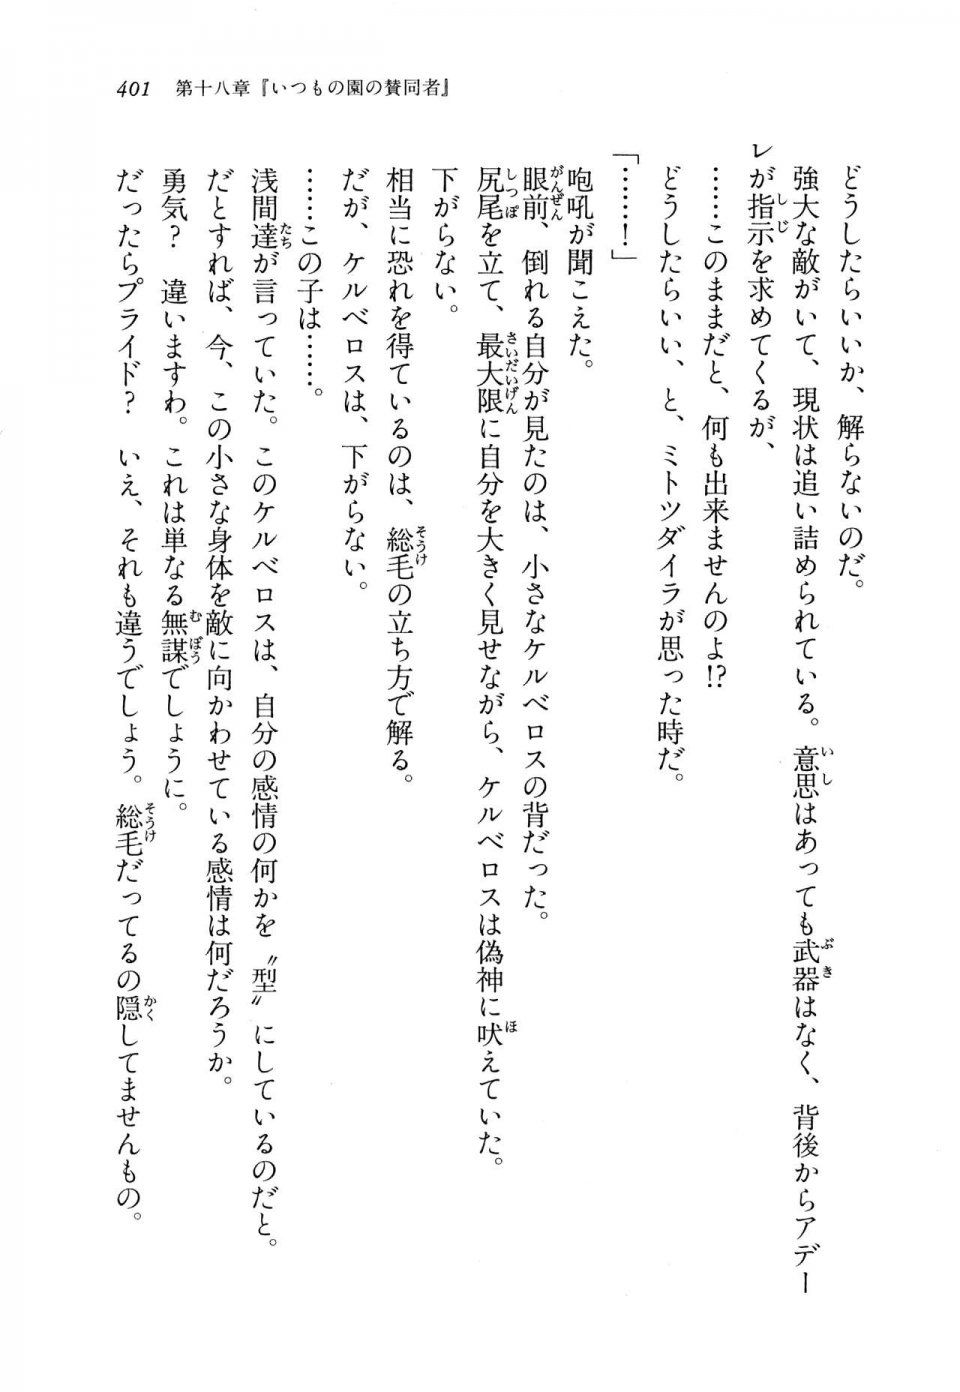 Kyoukai Senjou no Horizon BD Special Mininovel Vol 8(4B) - Photo #405